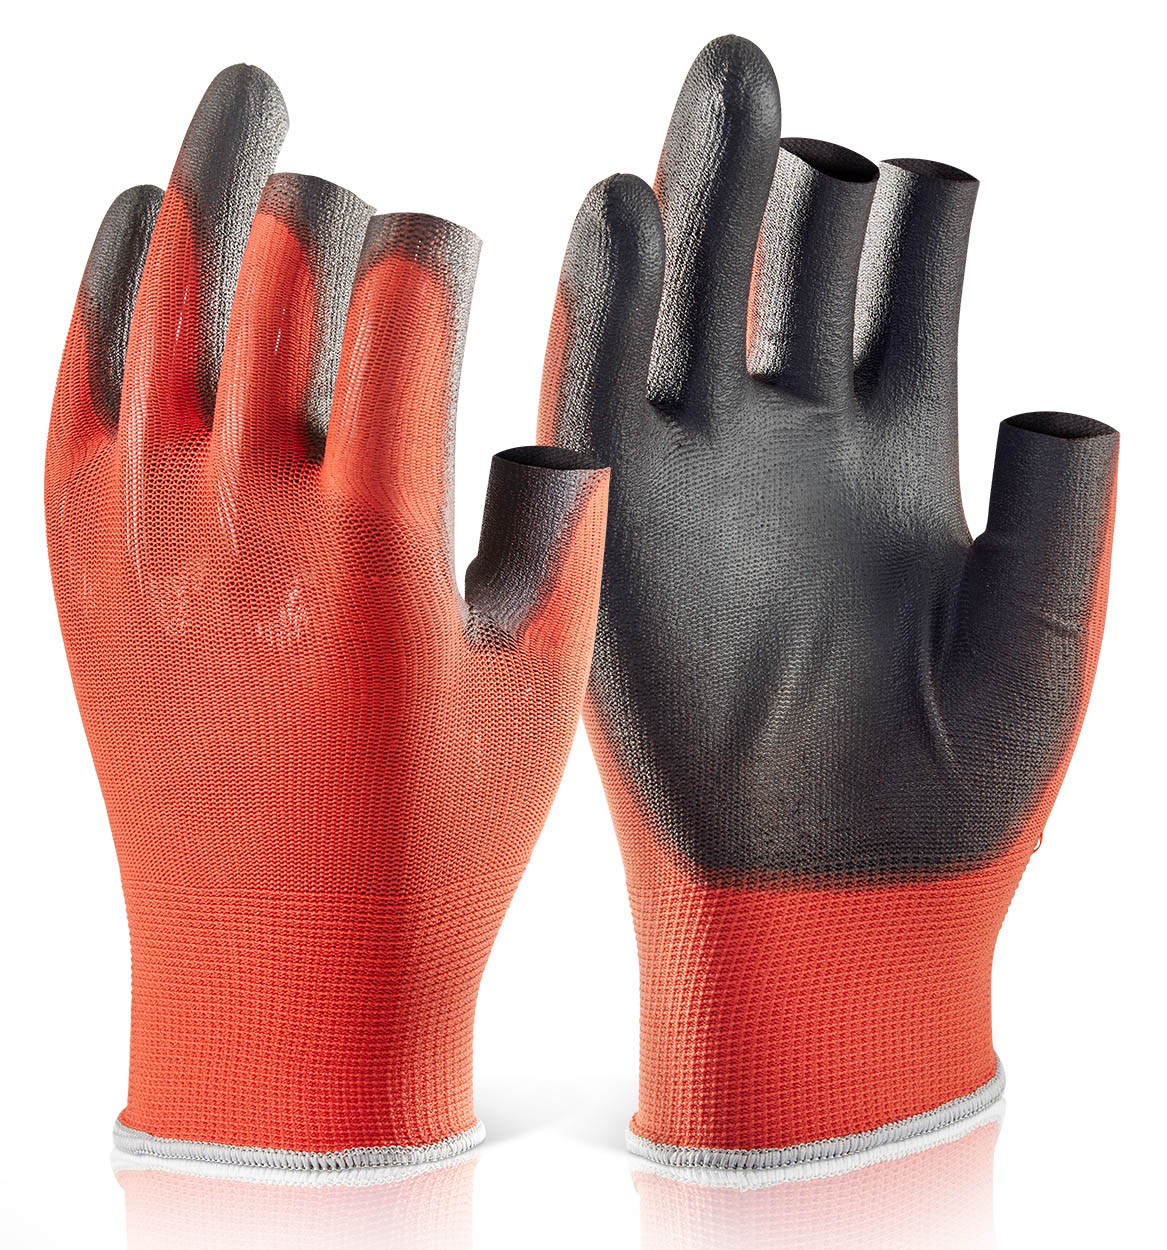 Click 2000 EC10 3 Fingerless PU Coated Gloves – Pack of 10